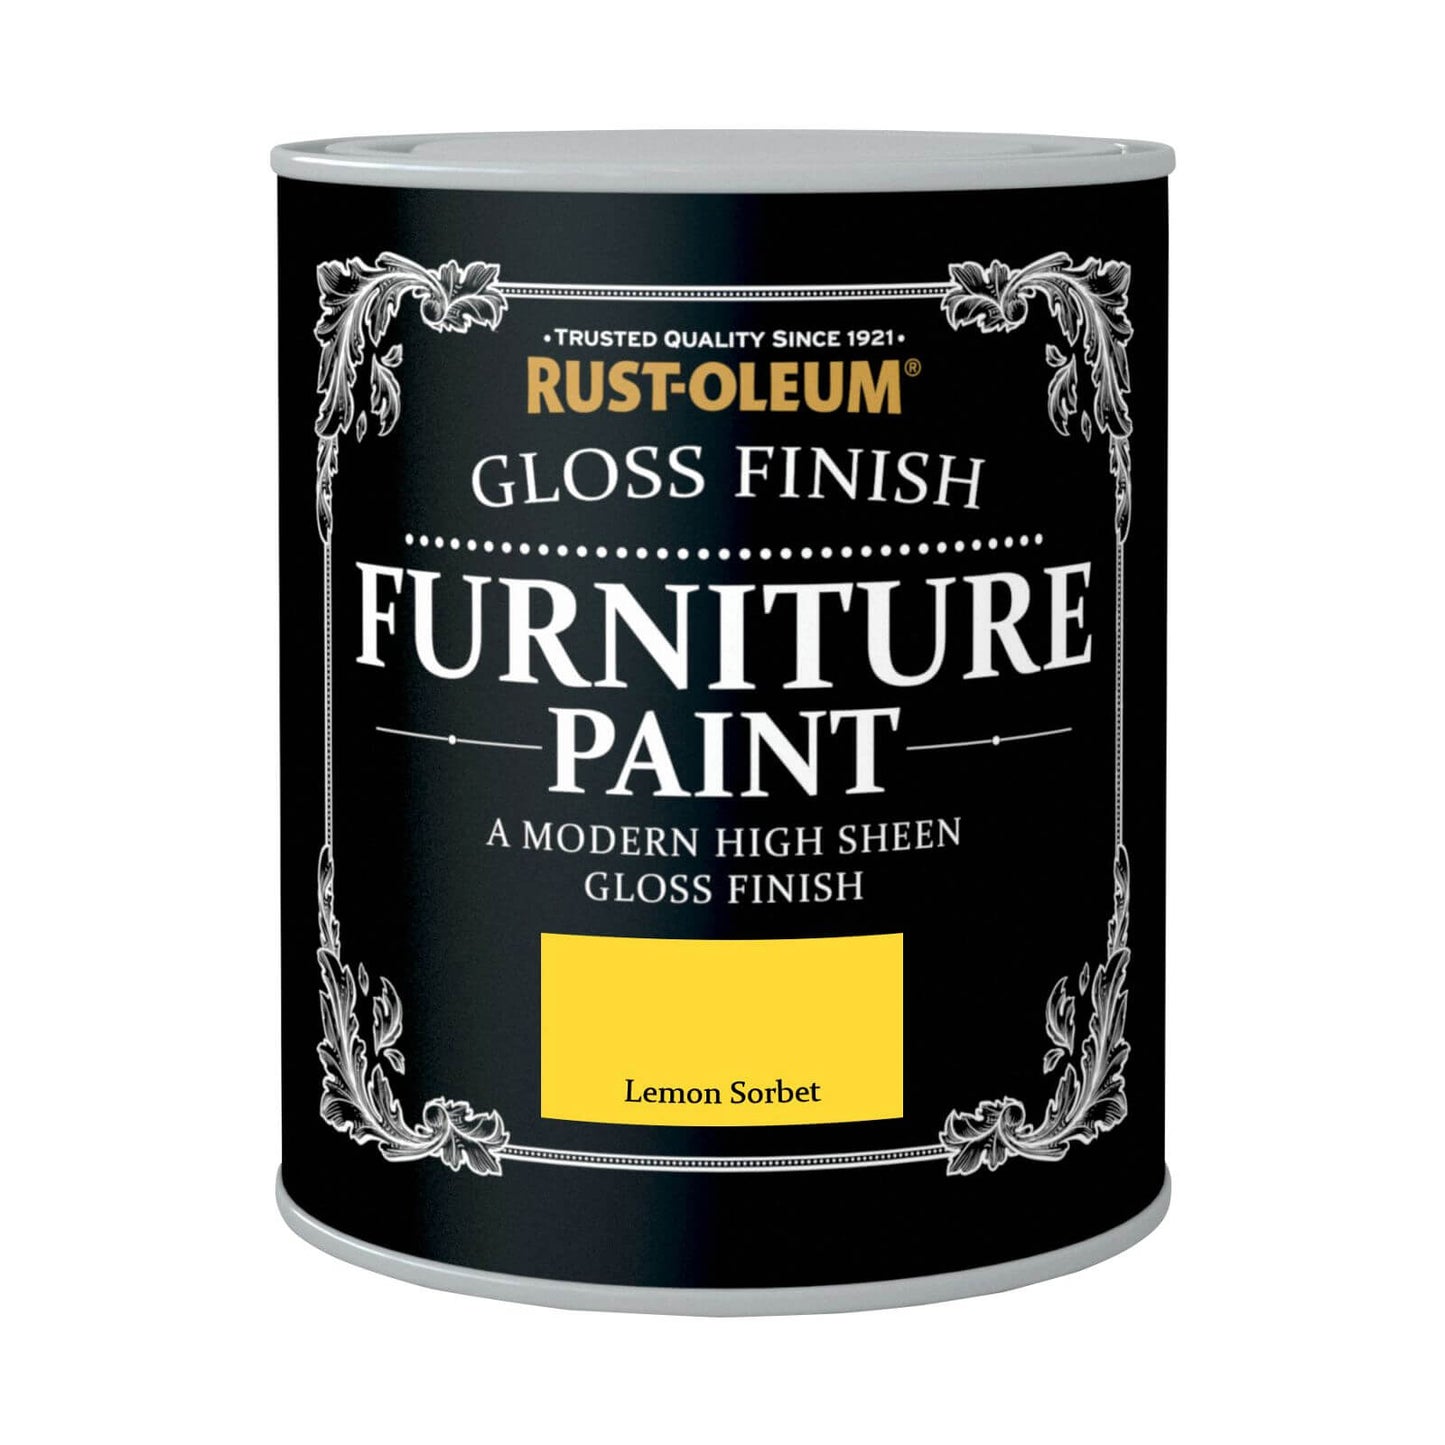 Rust-Oleum Gloss Finish Furniture Paint Lemon Sorbet